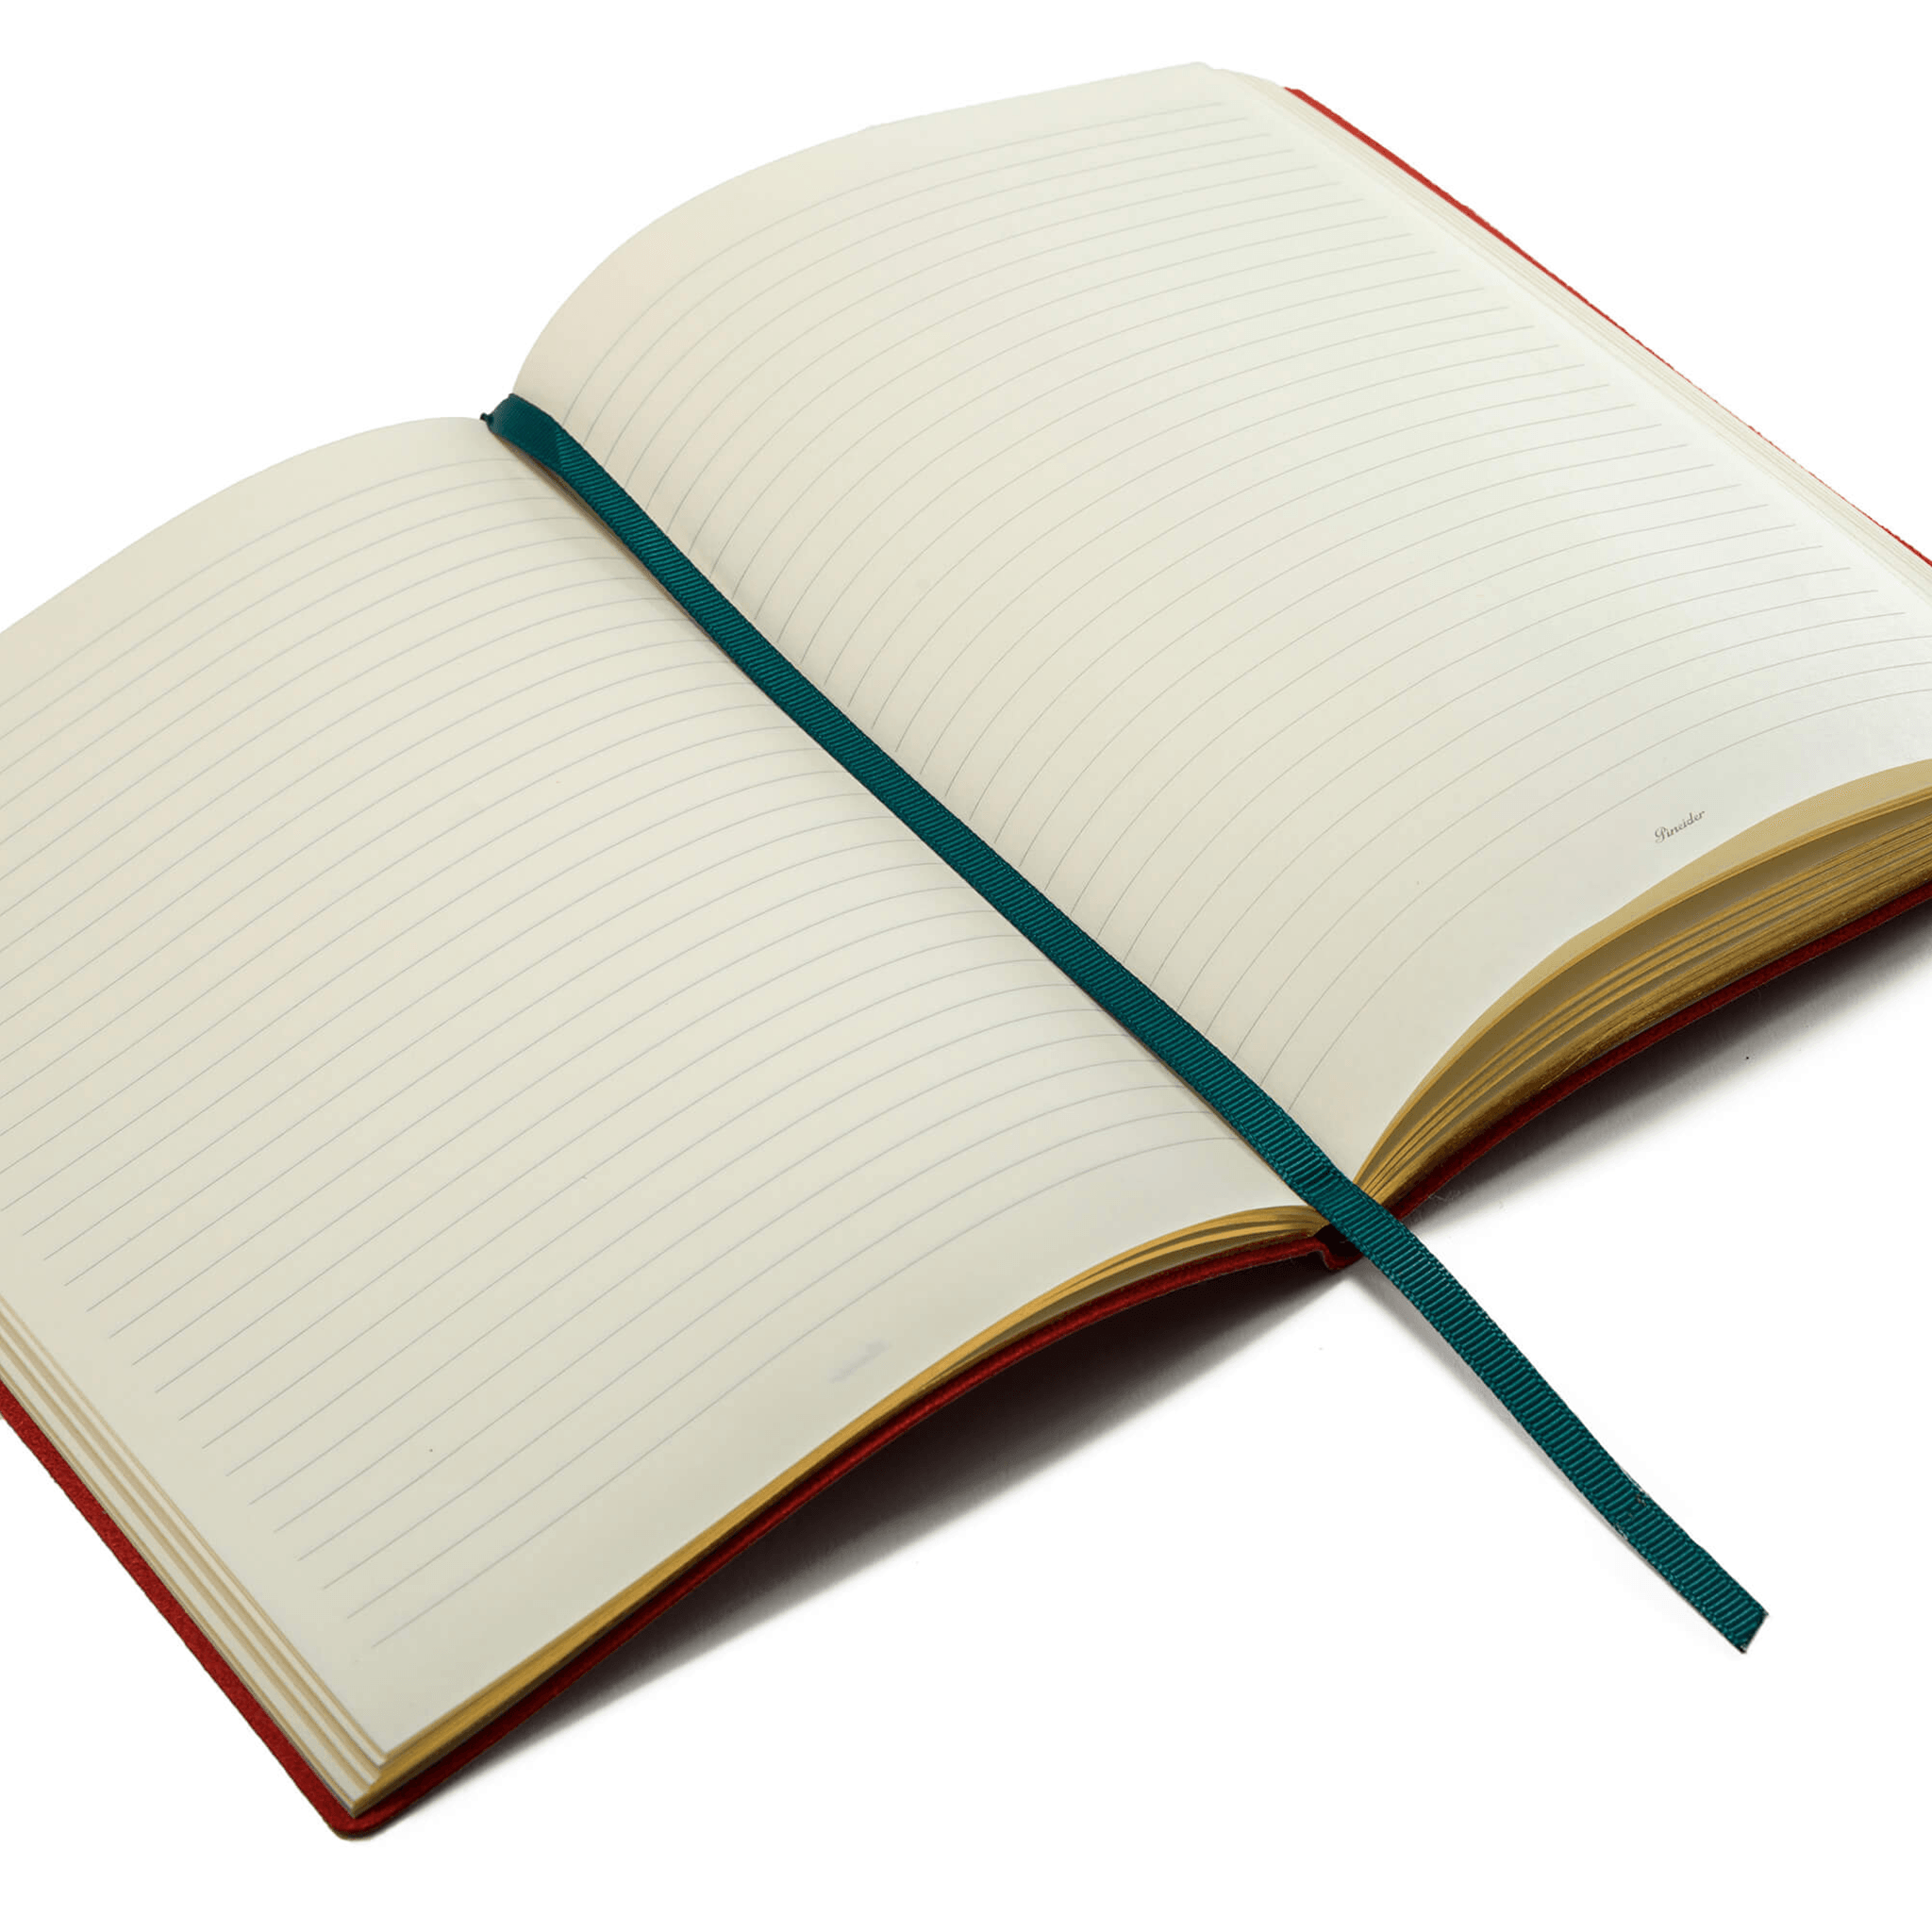 Pineider Milano Leather Laid Notebook Medium - Laywine's